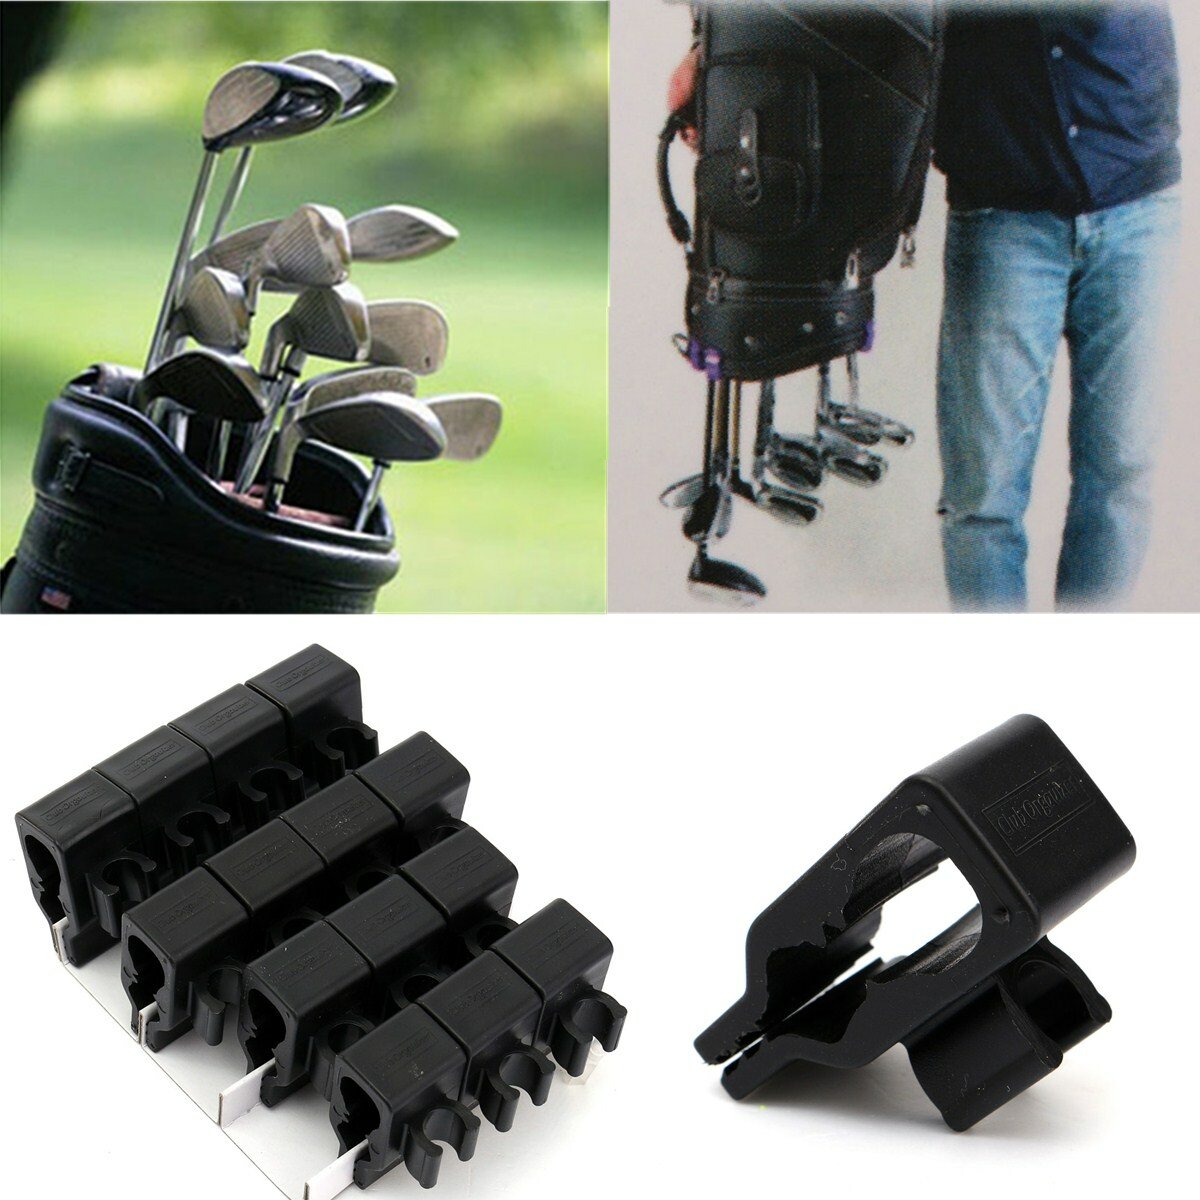 

14PCS Sports Golf Bag Clip On Putter Clamp Holder Putting Organizer Golf Club Grips Equipment